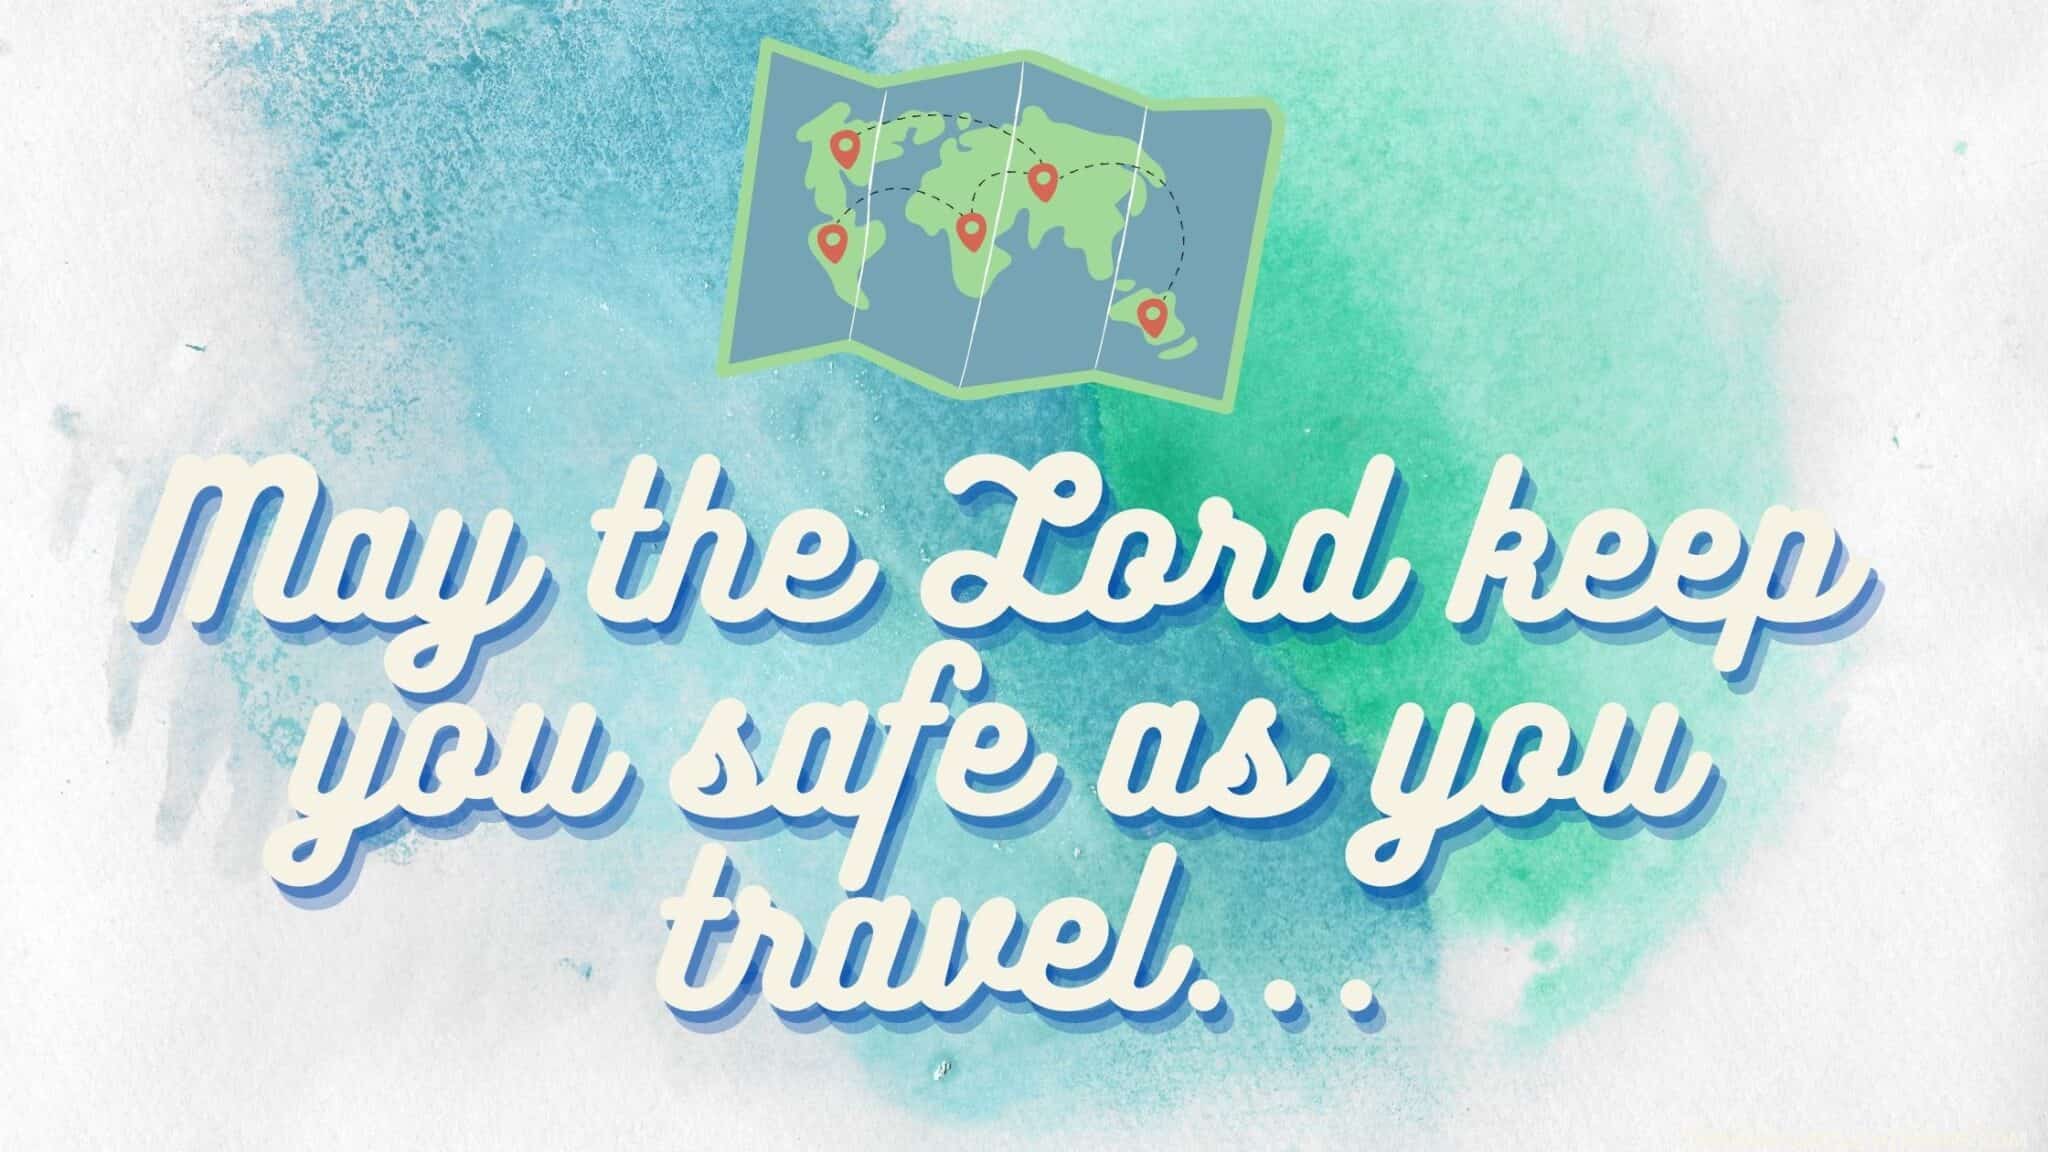 travel safe prayer